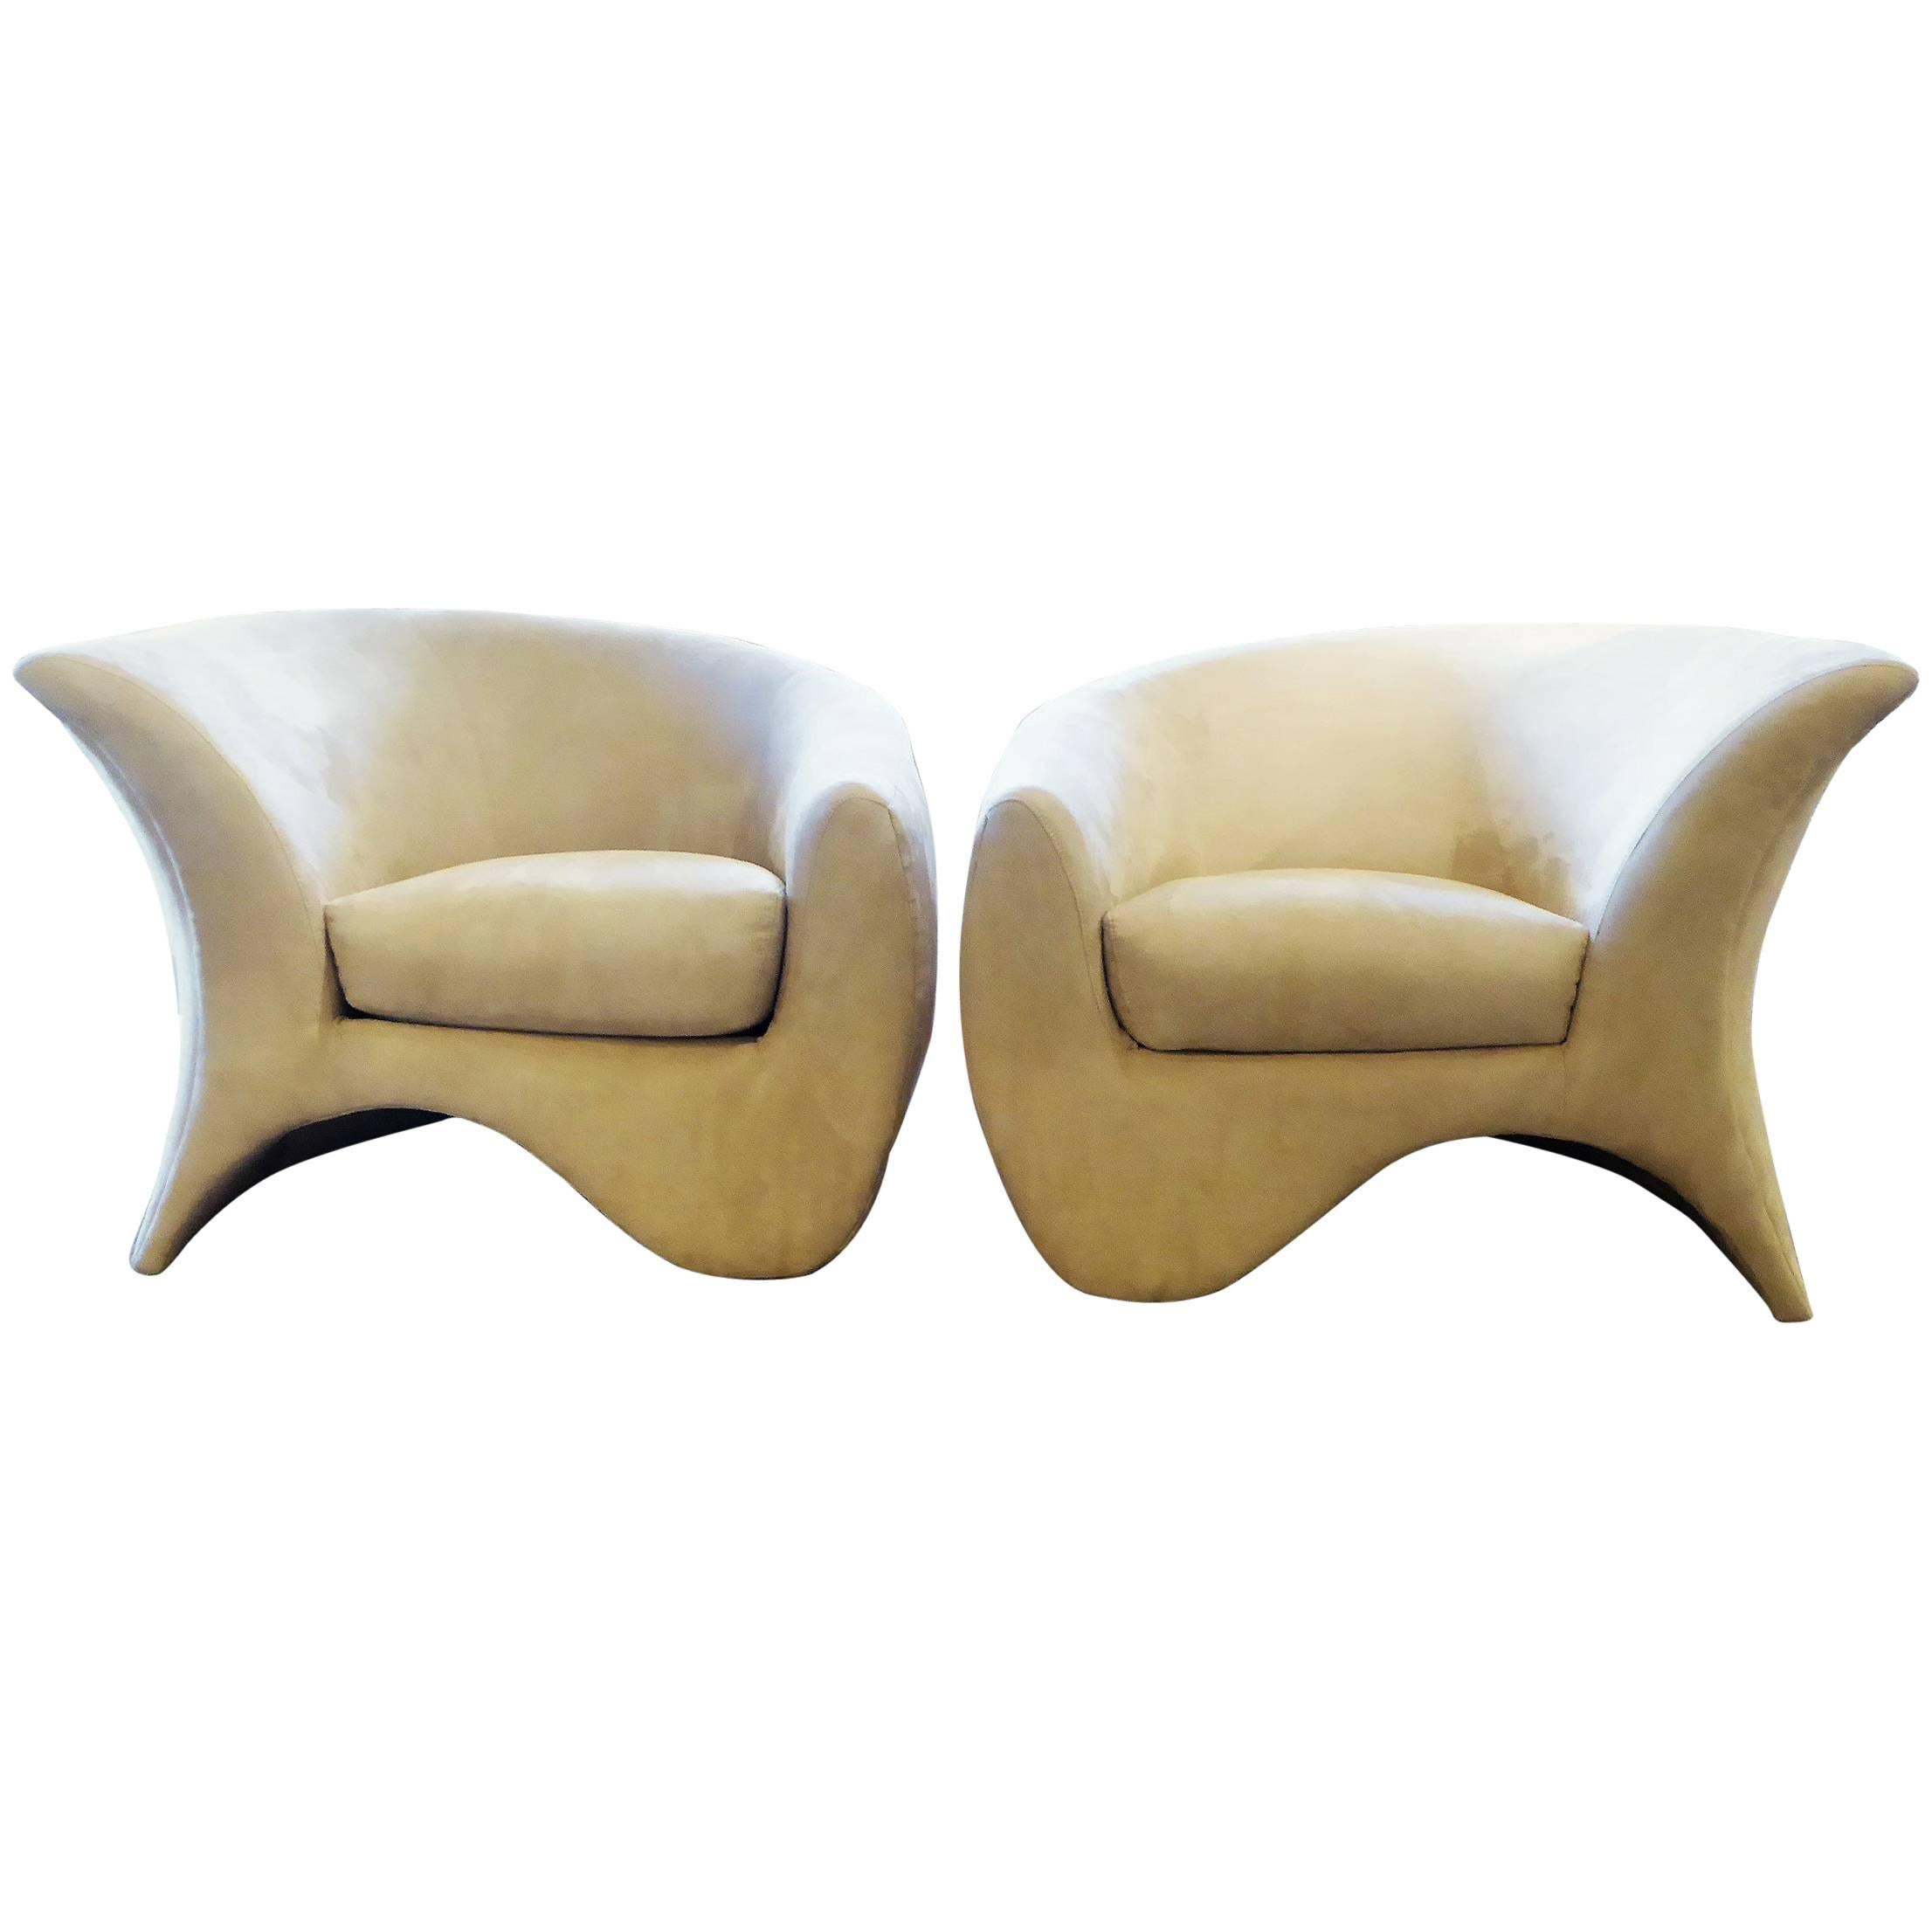 Pair of Modern Vladimir Kagan Hurricane Lounge Chairs for Directional